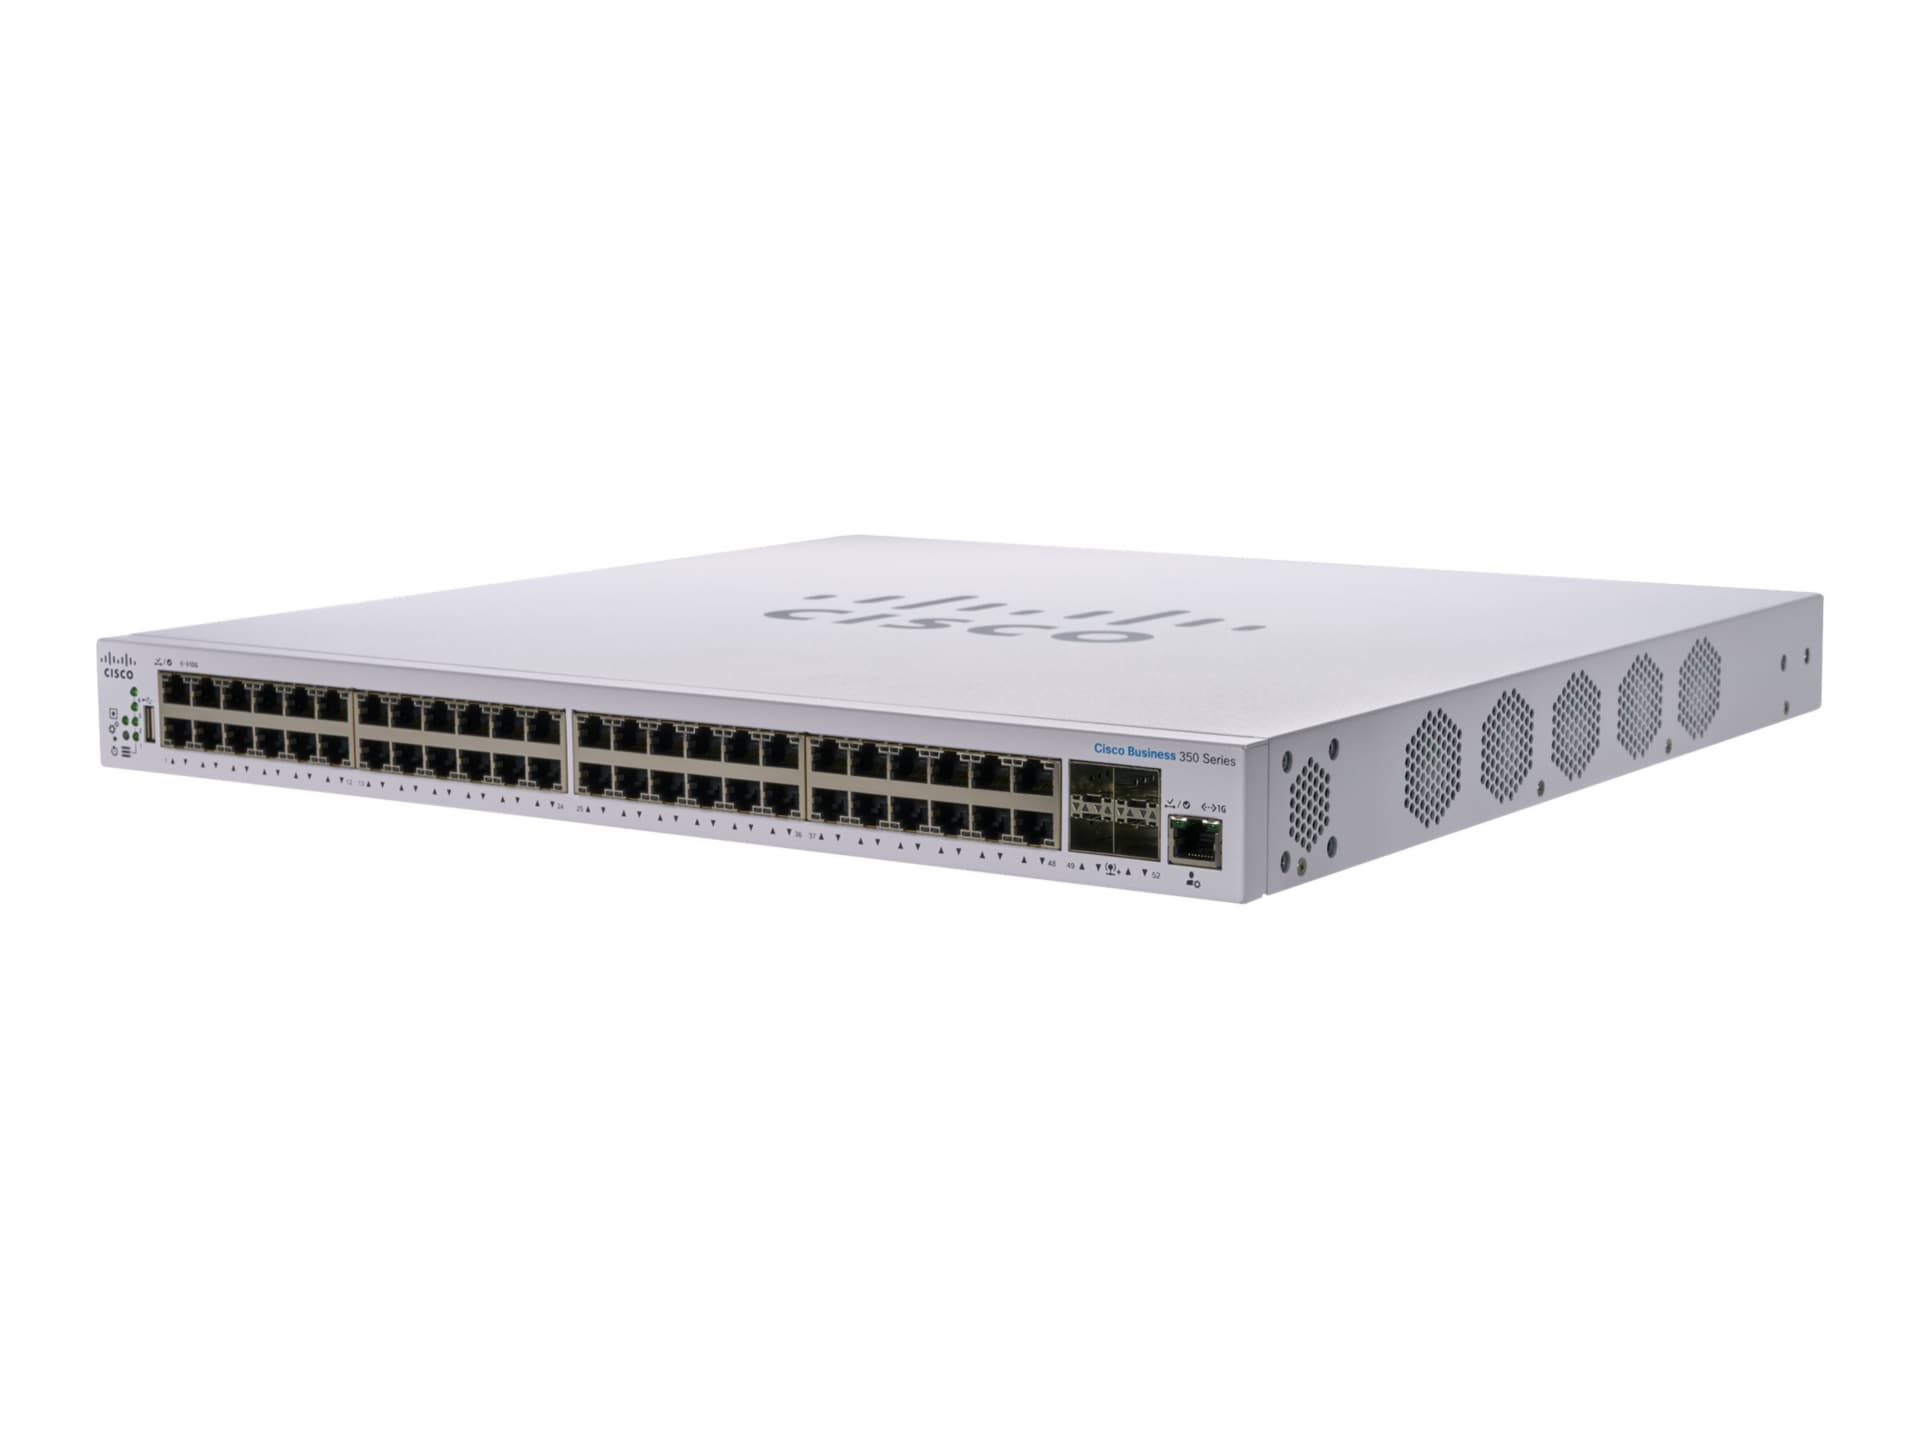 Cisco Business 350 Series CBS350-48XT-4X - switch - 48 ports - managed - ra